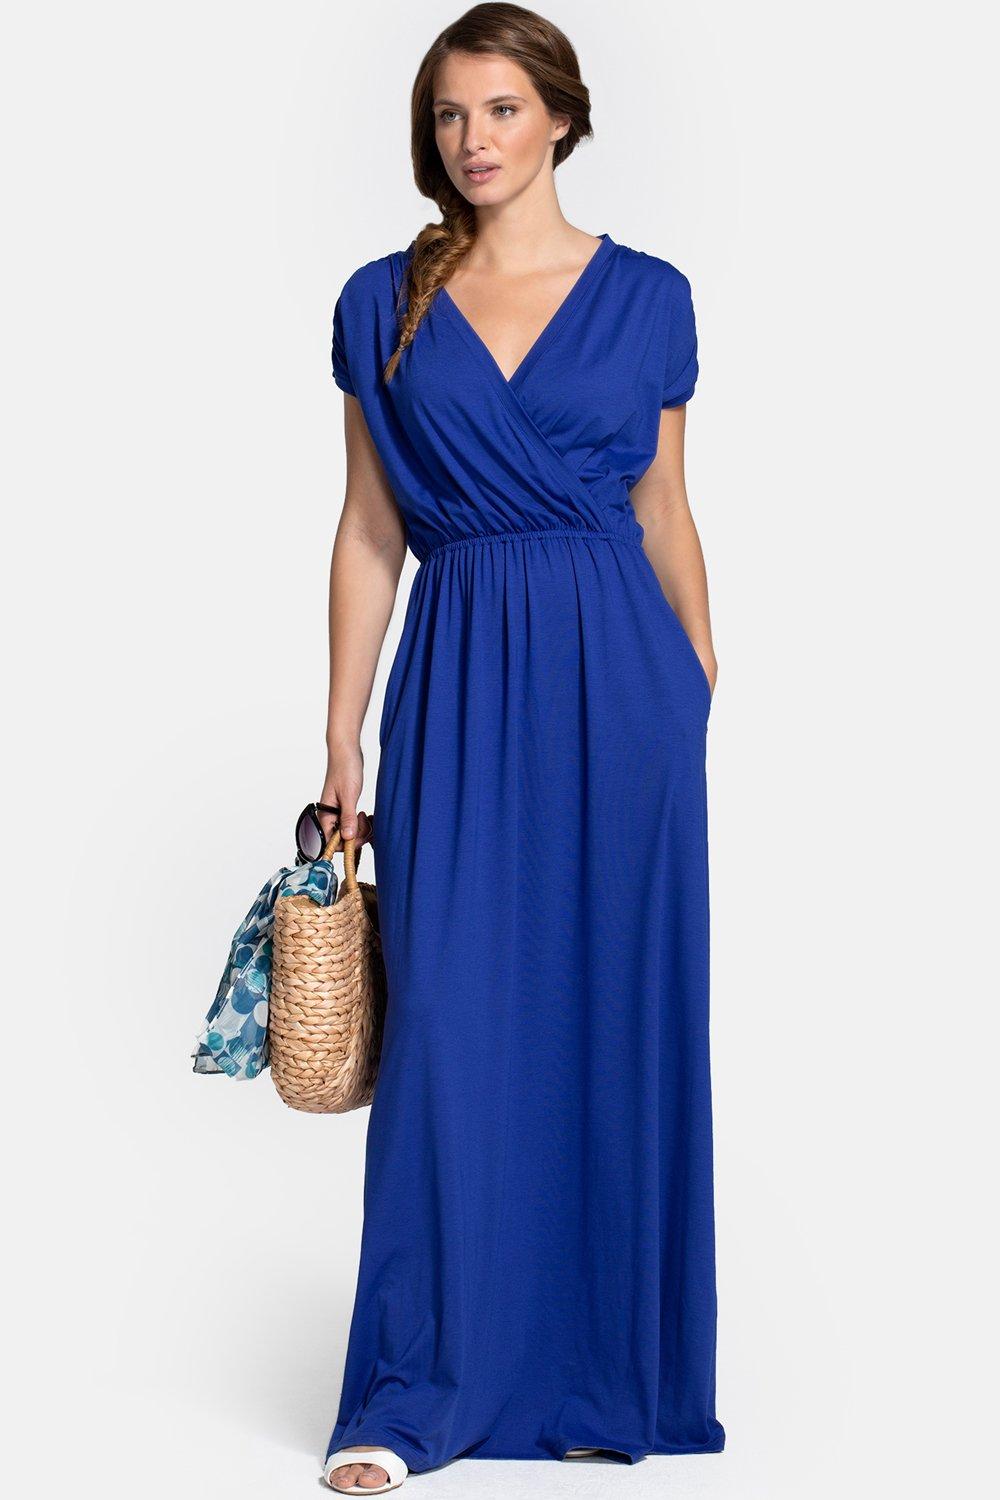 navy blue dress debenhams Big sale - OFF 79%